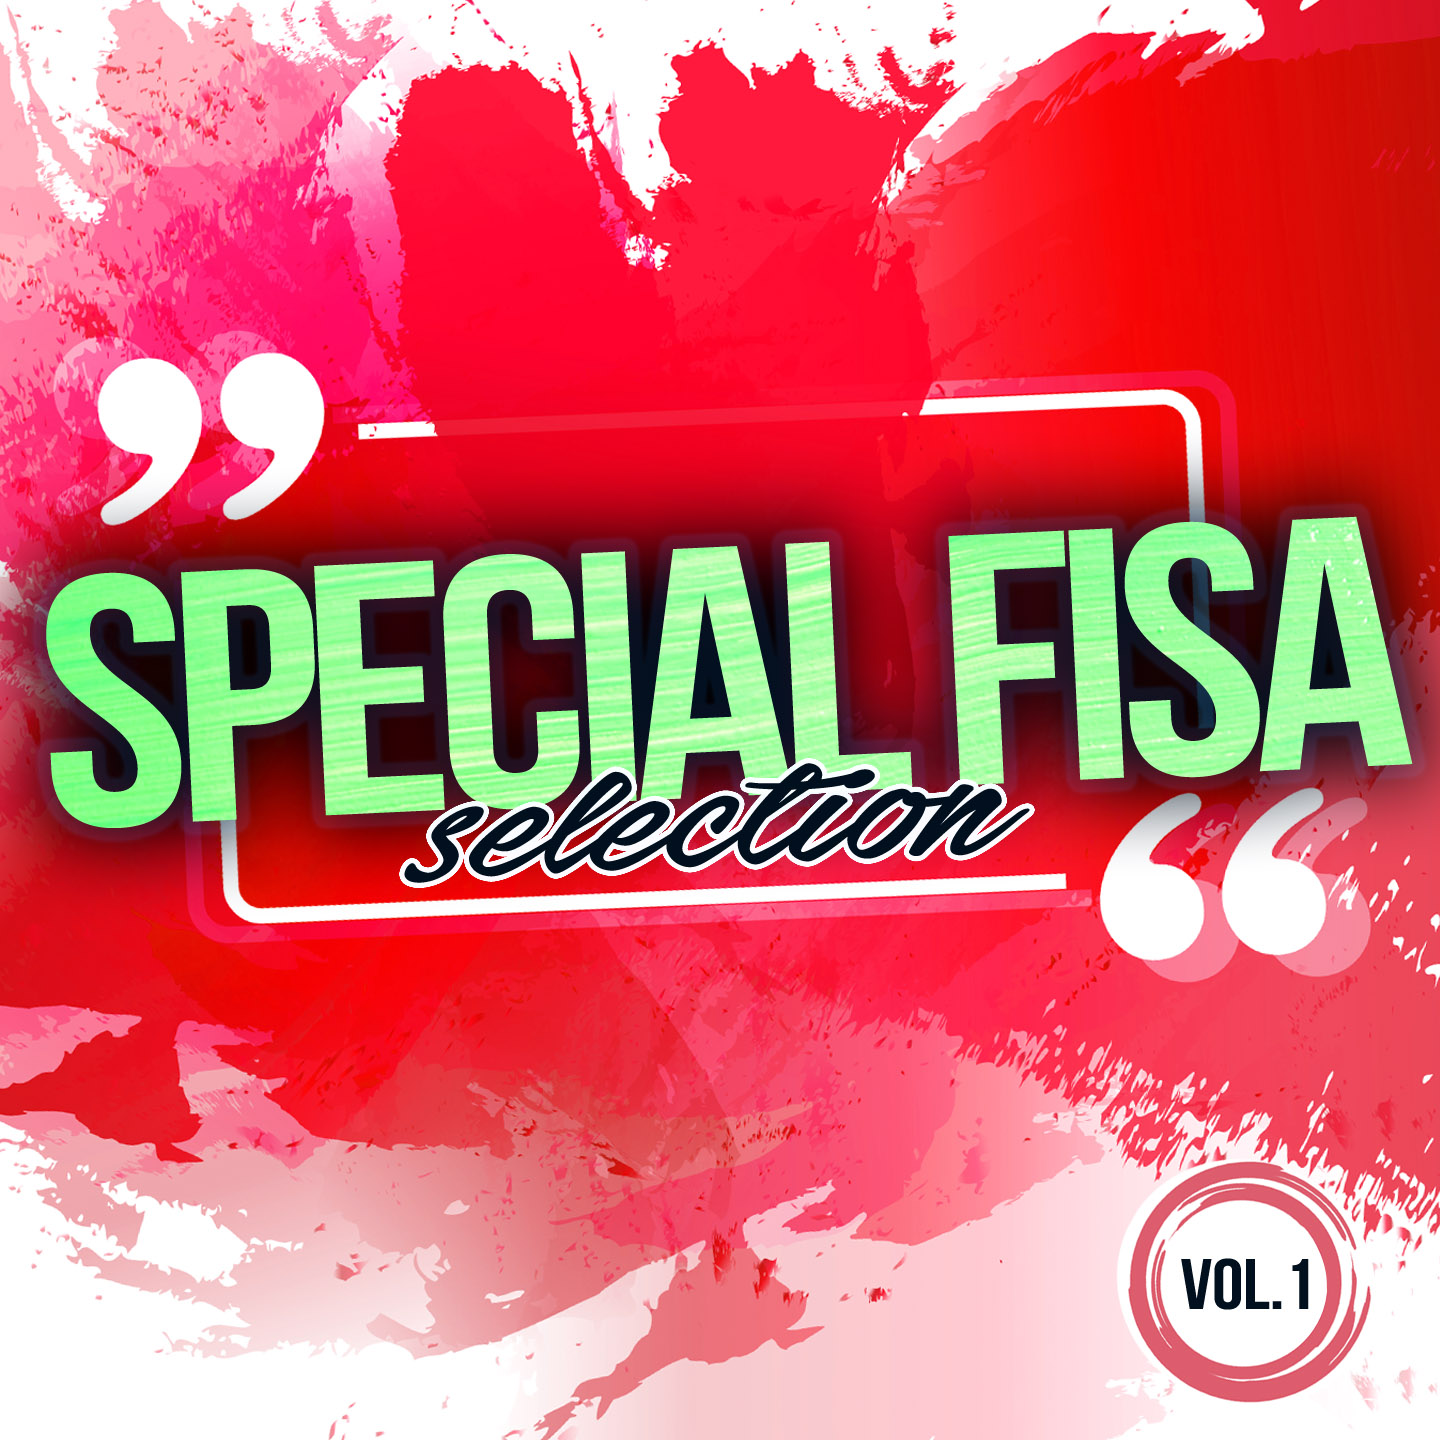 SPECIAL FISA SELECTION -1 copia